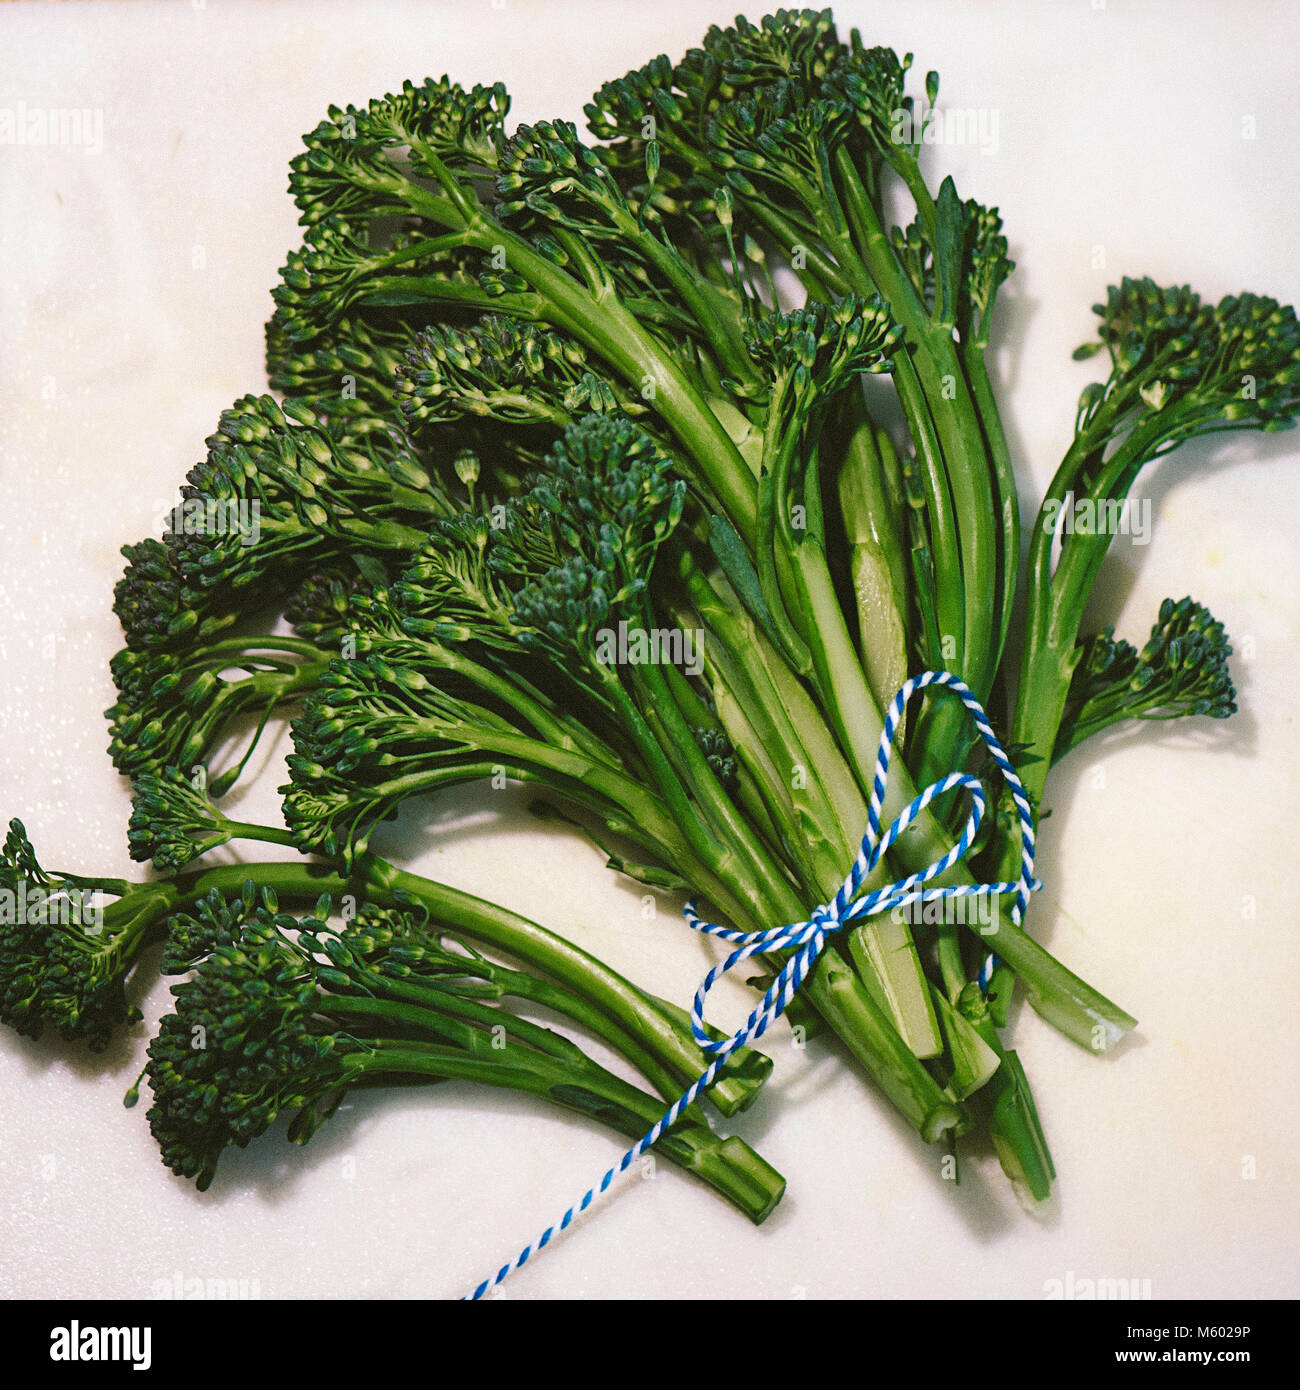 Broccolini on a cutting board Stock Photo